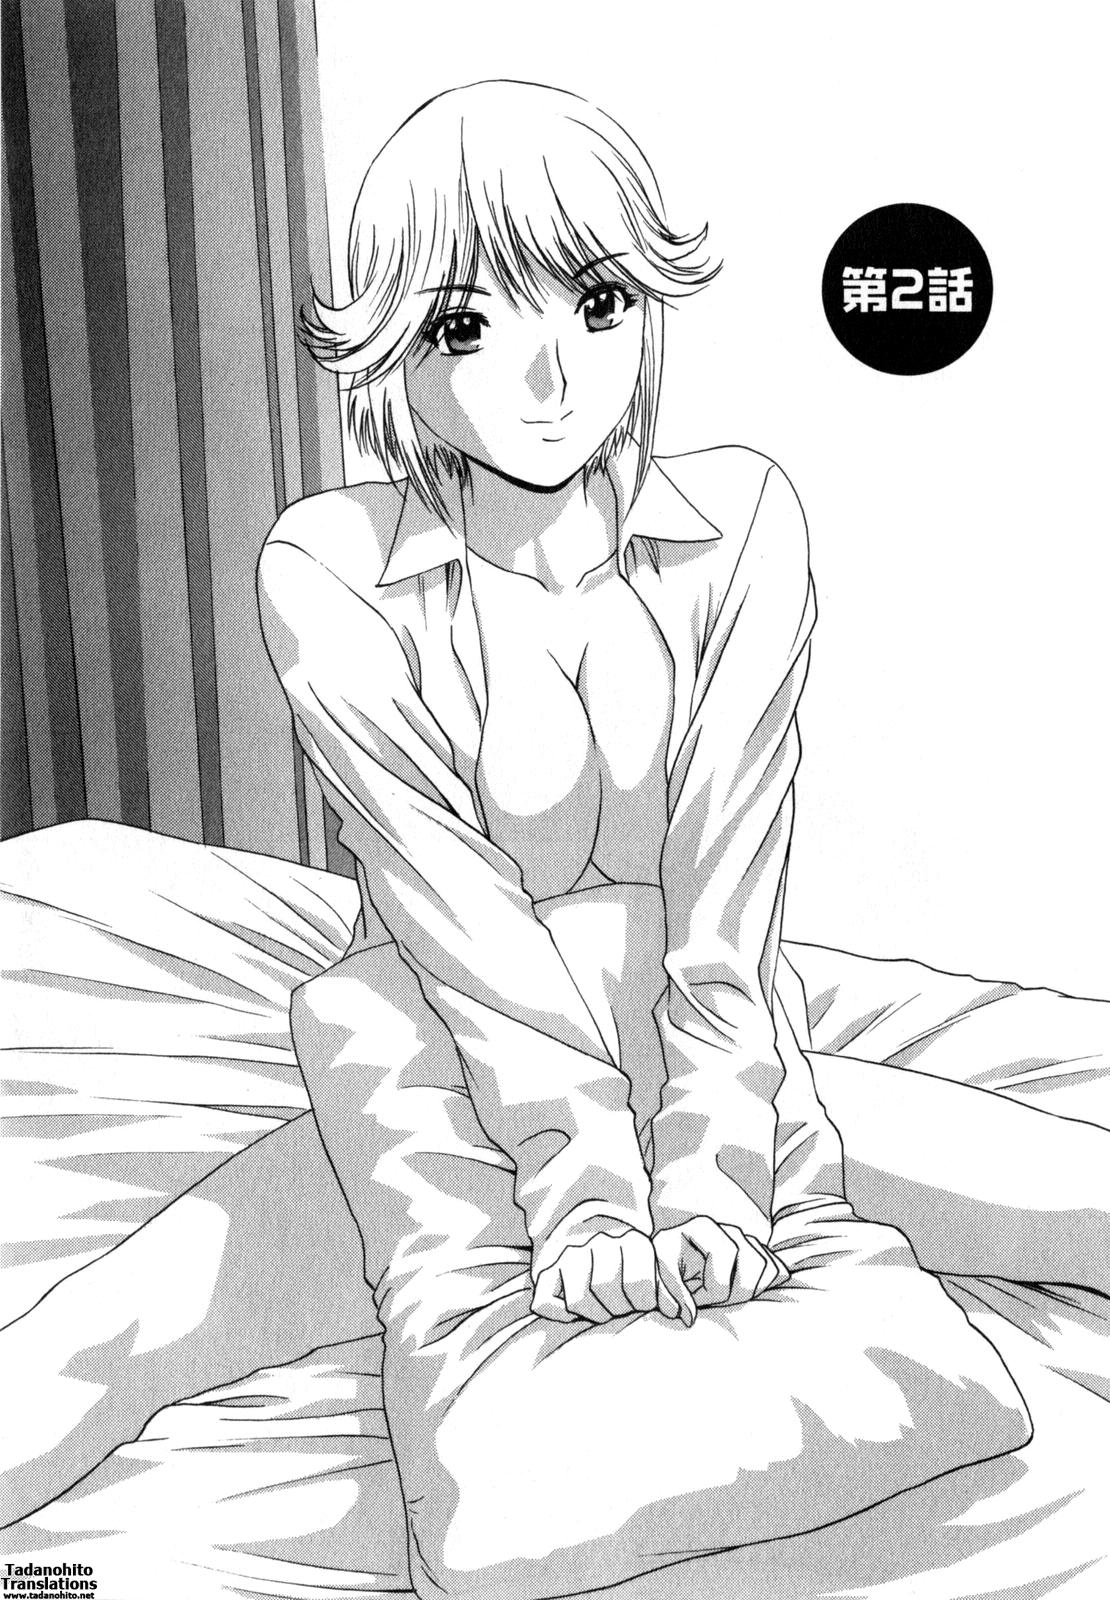 [Hidemaru] Life with Married Women Just Like a Manga 1 - Ch. 1-7 [English] {Tadanohito} 26